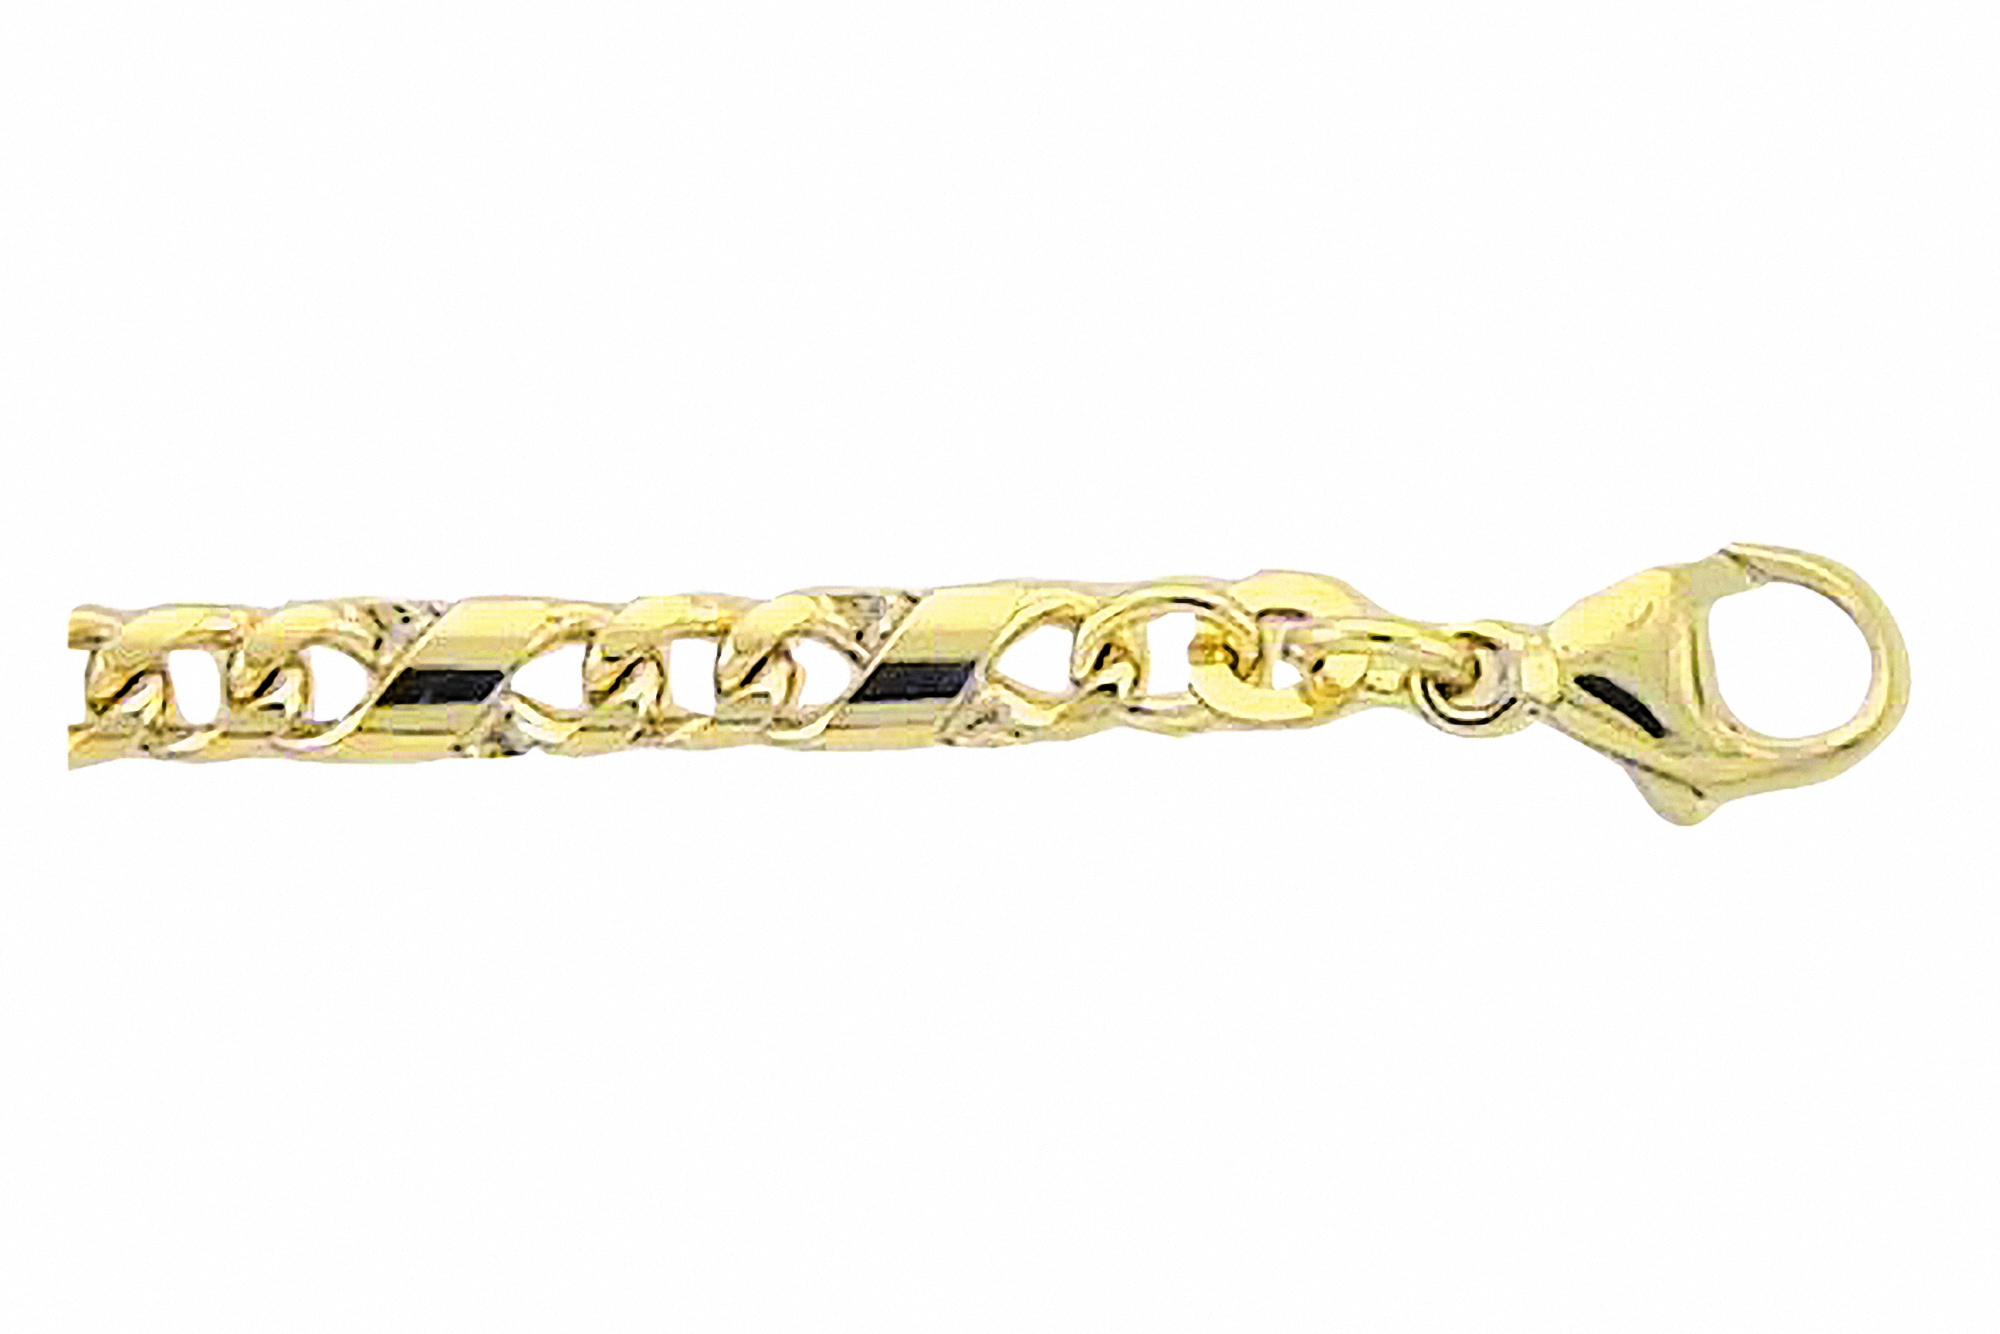 Goldarmband »Damen Goldschmuck 333 Gold Fantasie Armband 21 cm«, 21 cm 333 Gold...